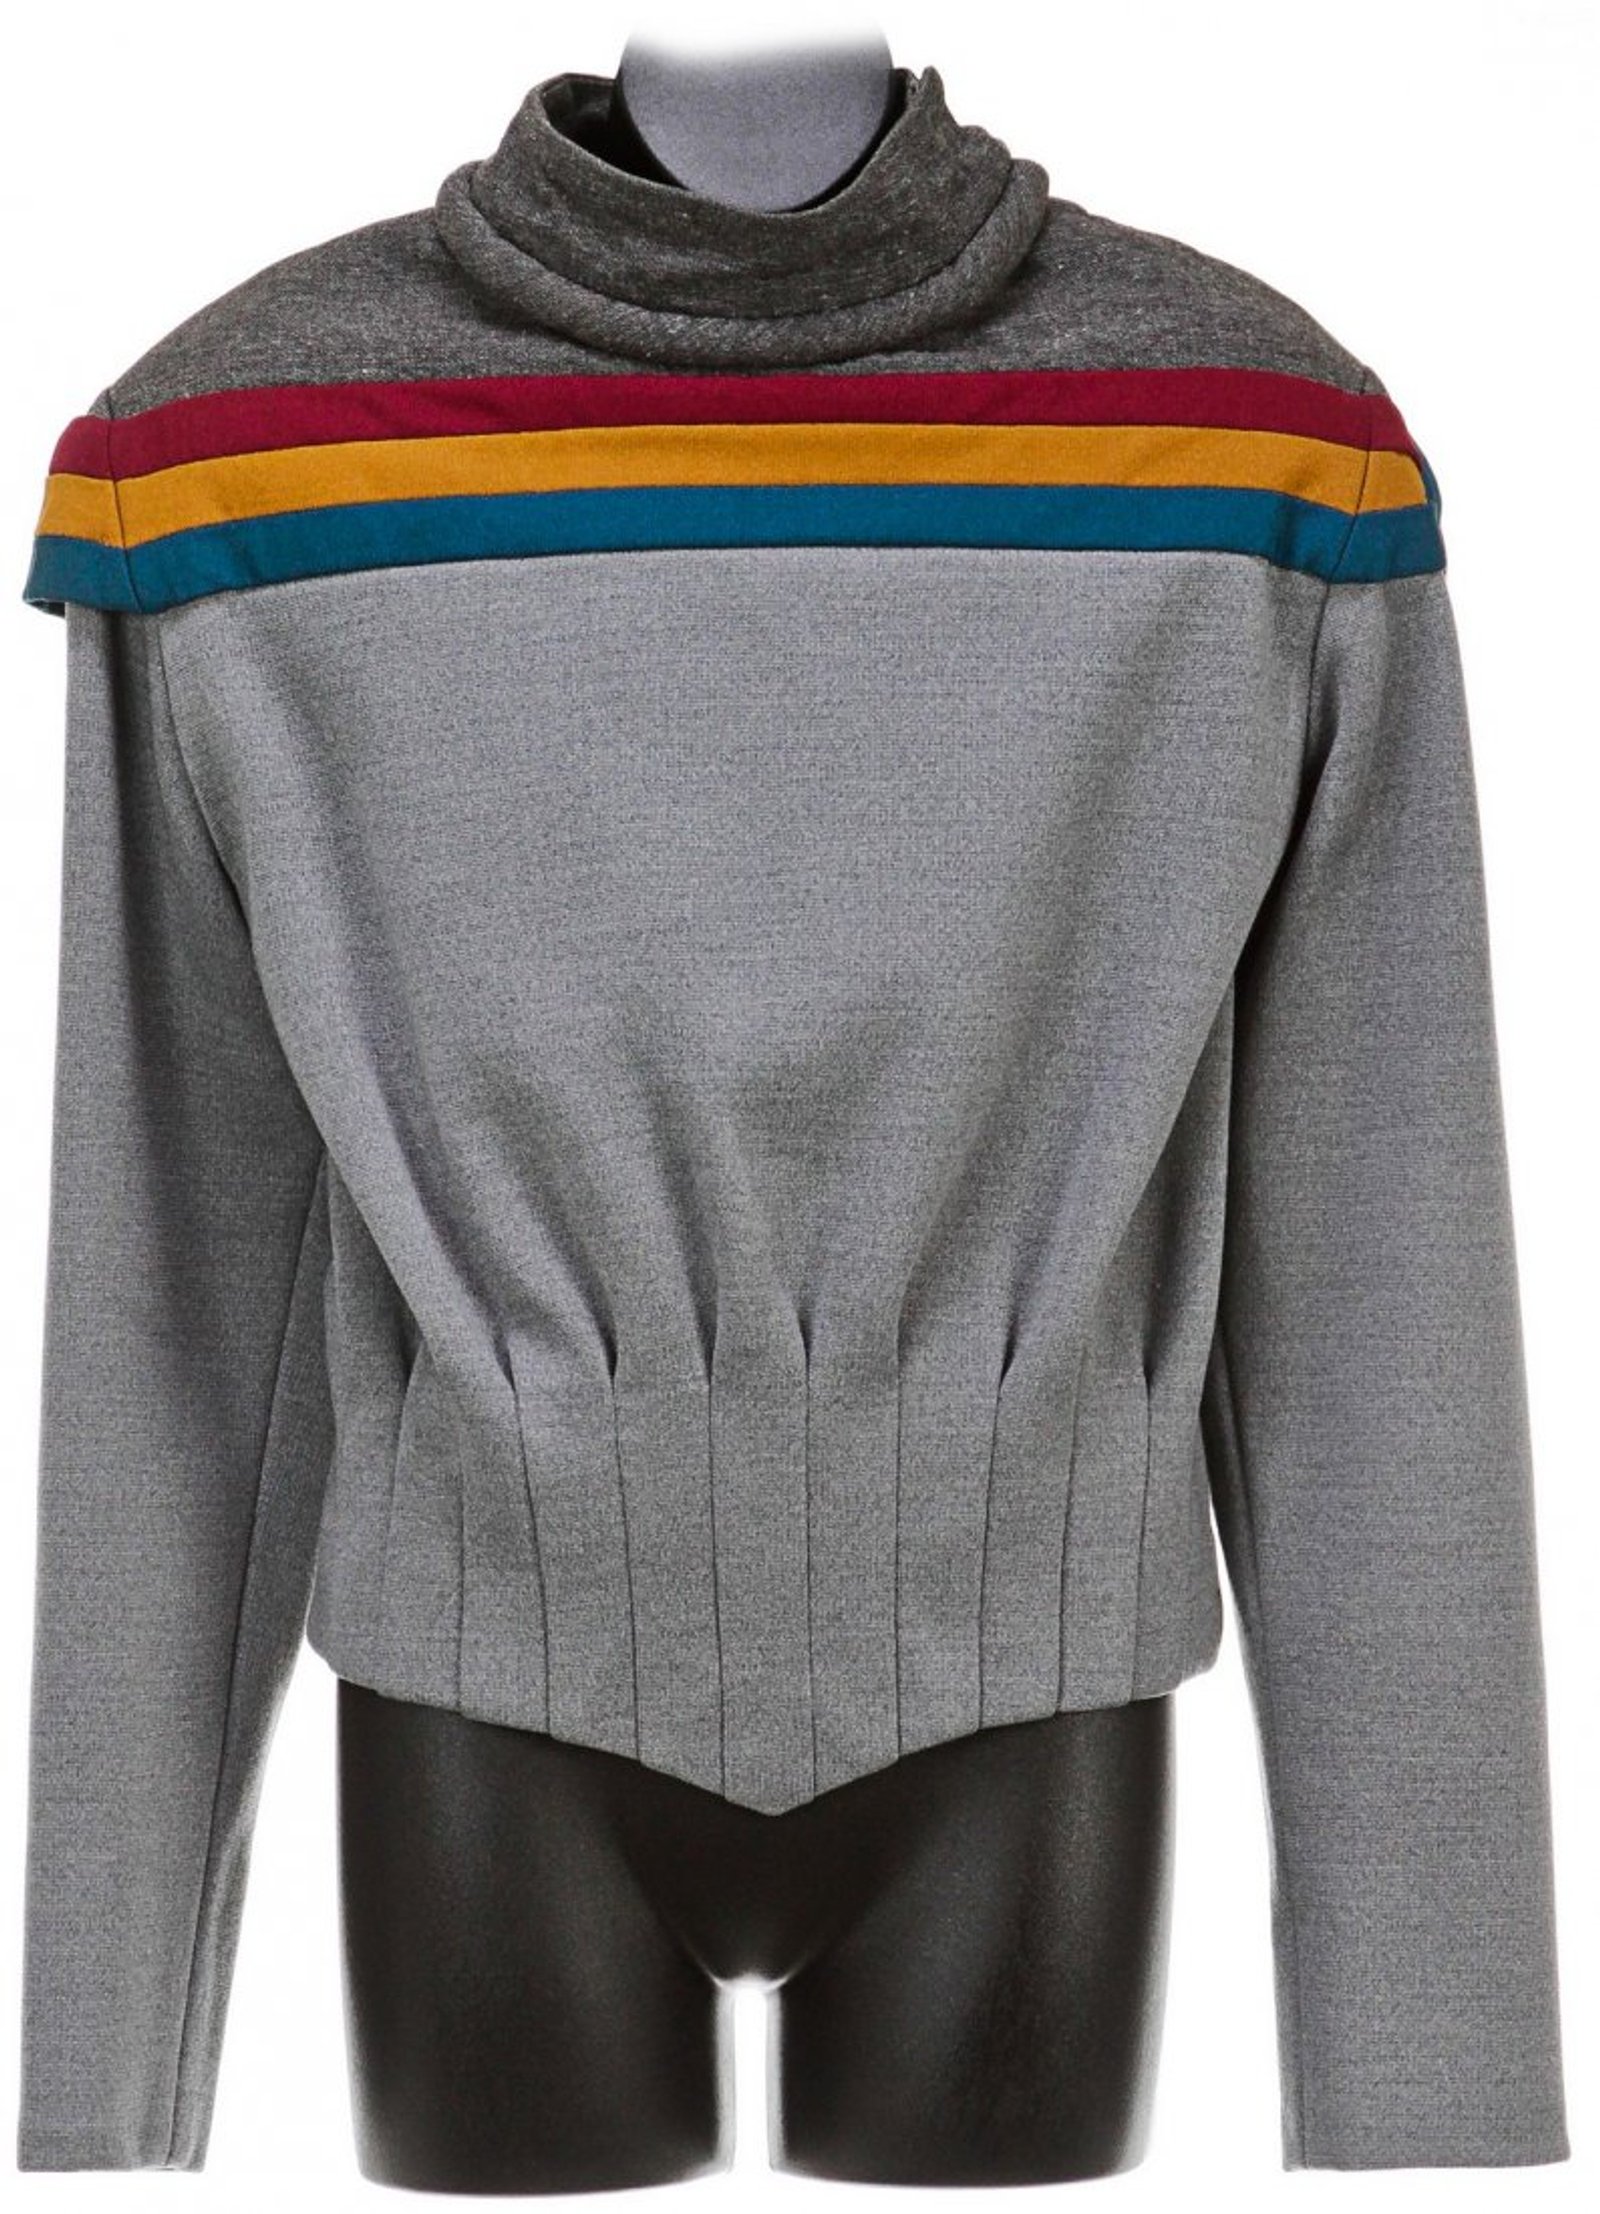 Wesley Crusher sweater - Star Trek Costume Guide